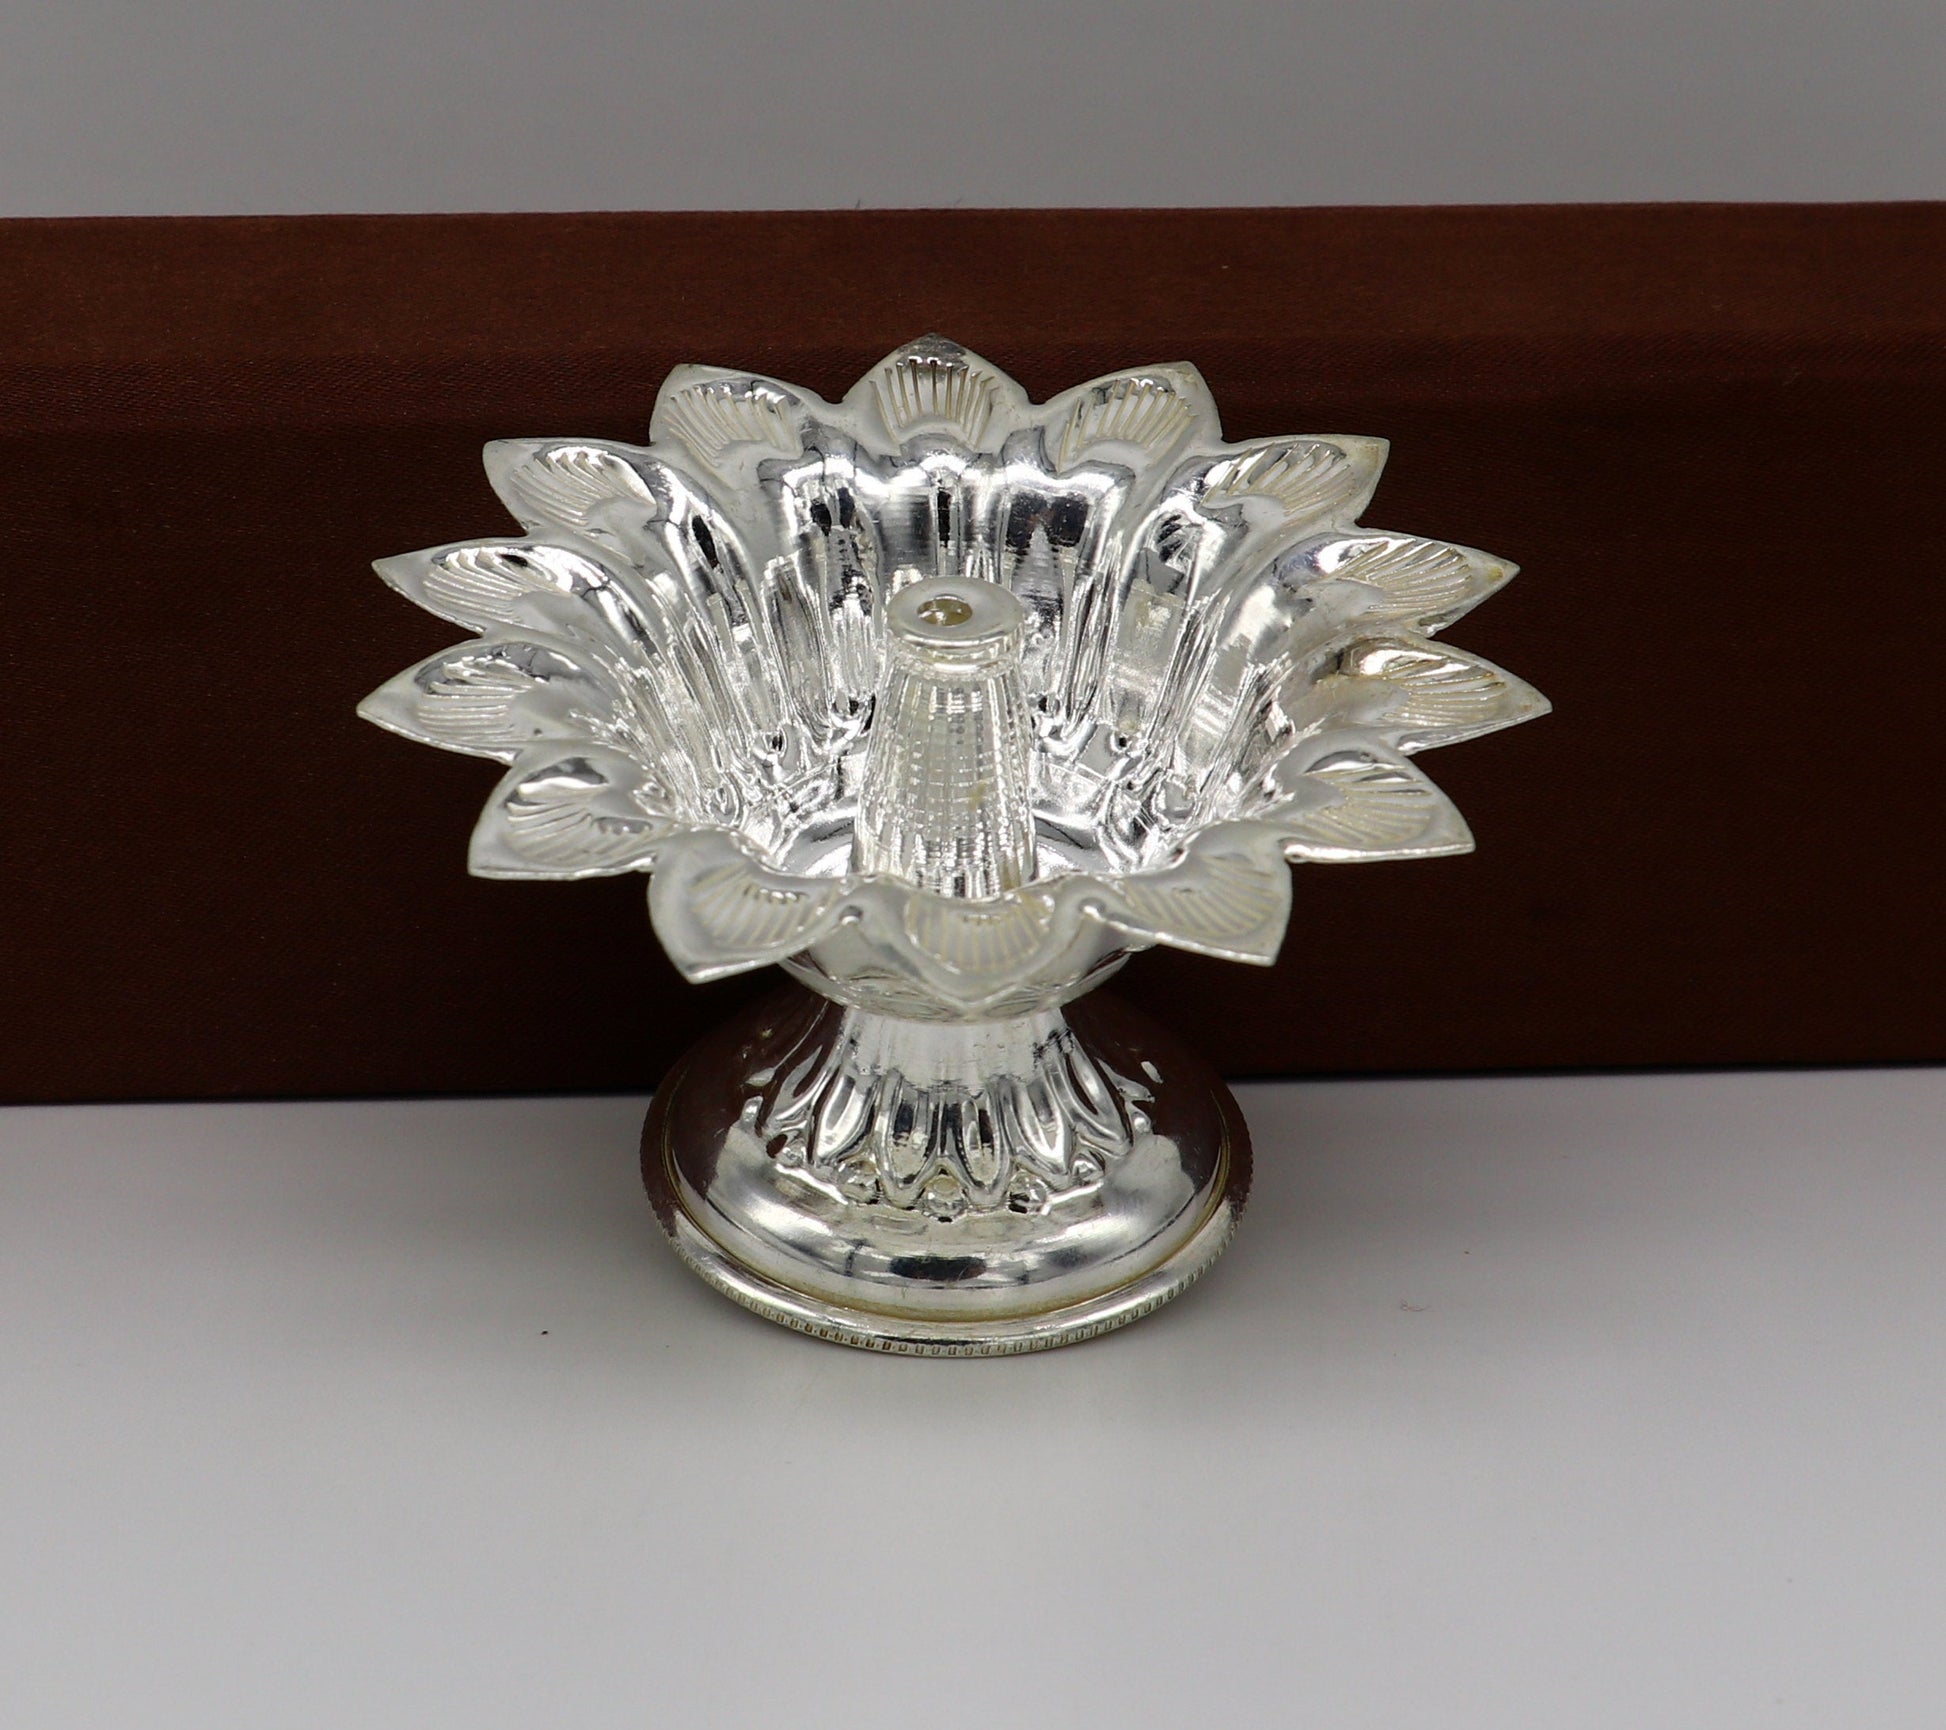 Fine 999 silver handmade flower shape oil lamp, silver temple utensils, silver diya, deepak, silver vessels, silver art decorative art su175 - TRIBAL ORNAMENTS